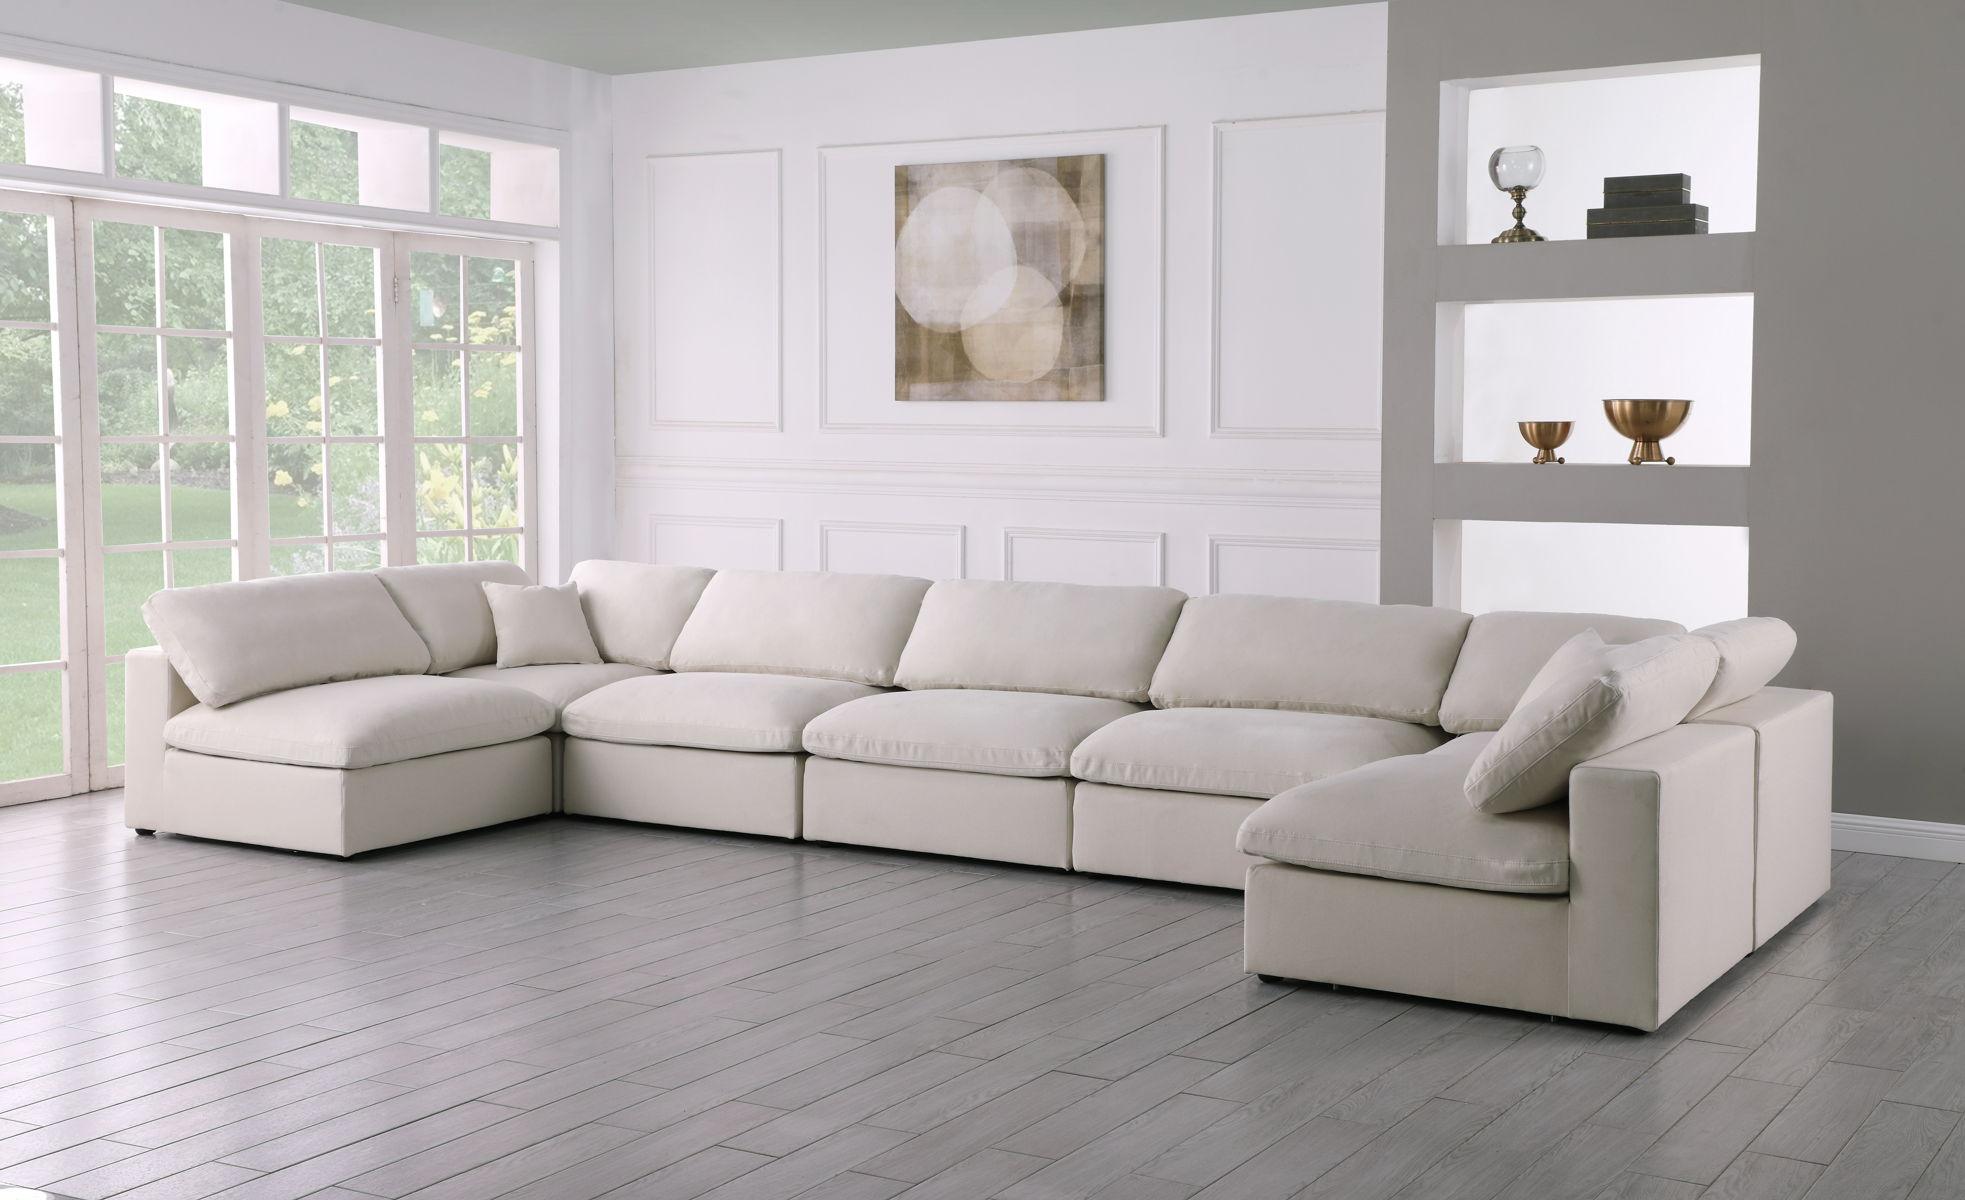 Meridian Furniture - Plush - Velvet Standart Comfort Modular Sectional 7 Piece - Cream - 5th Avenue Furniture